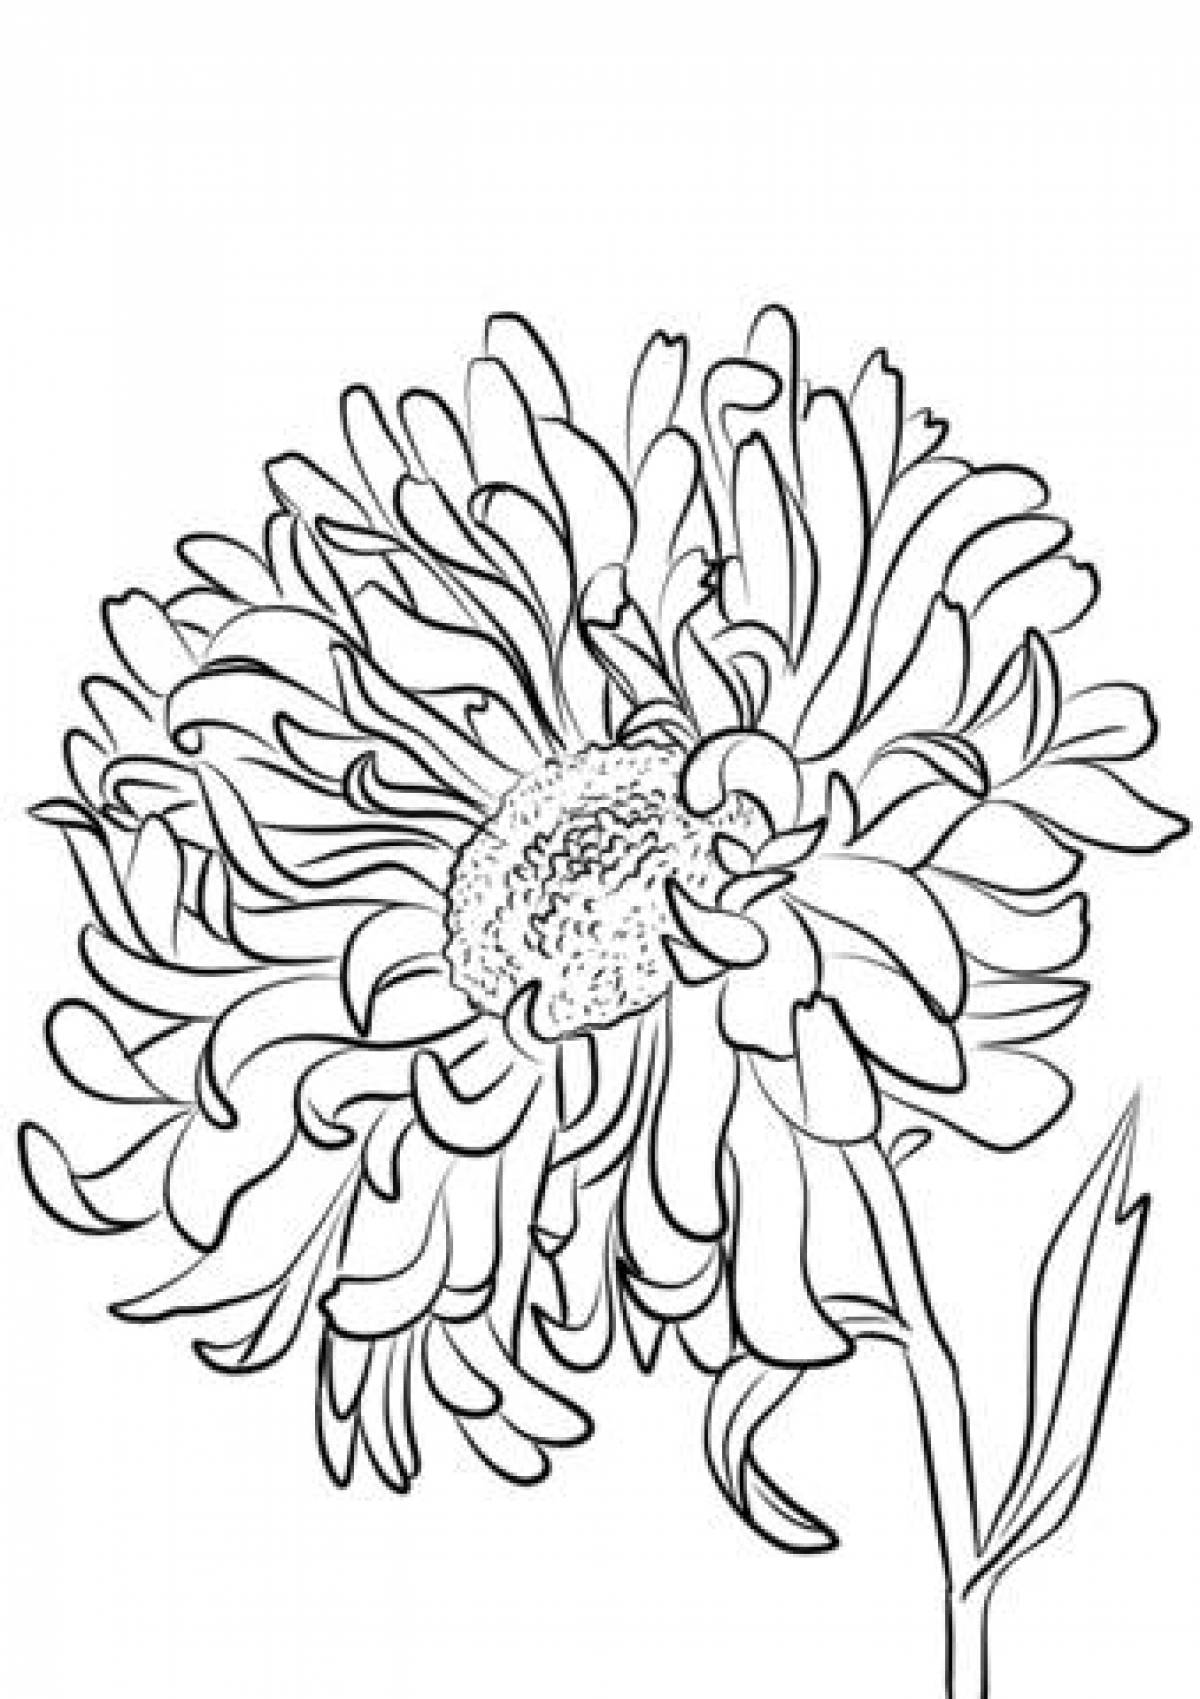 Шаблон хризантемы